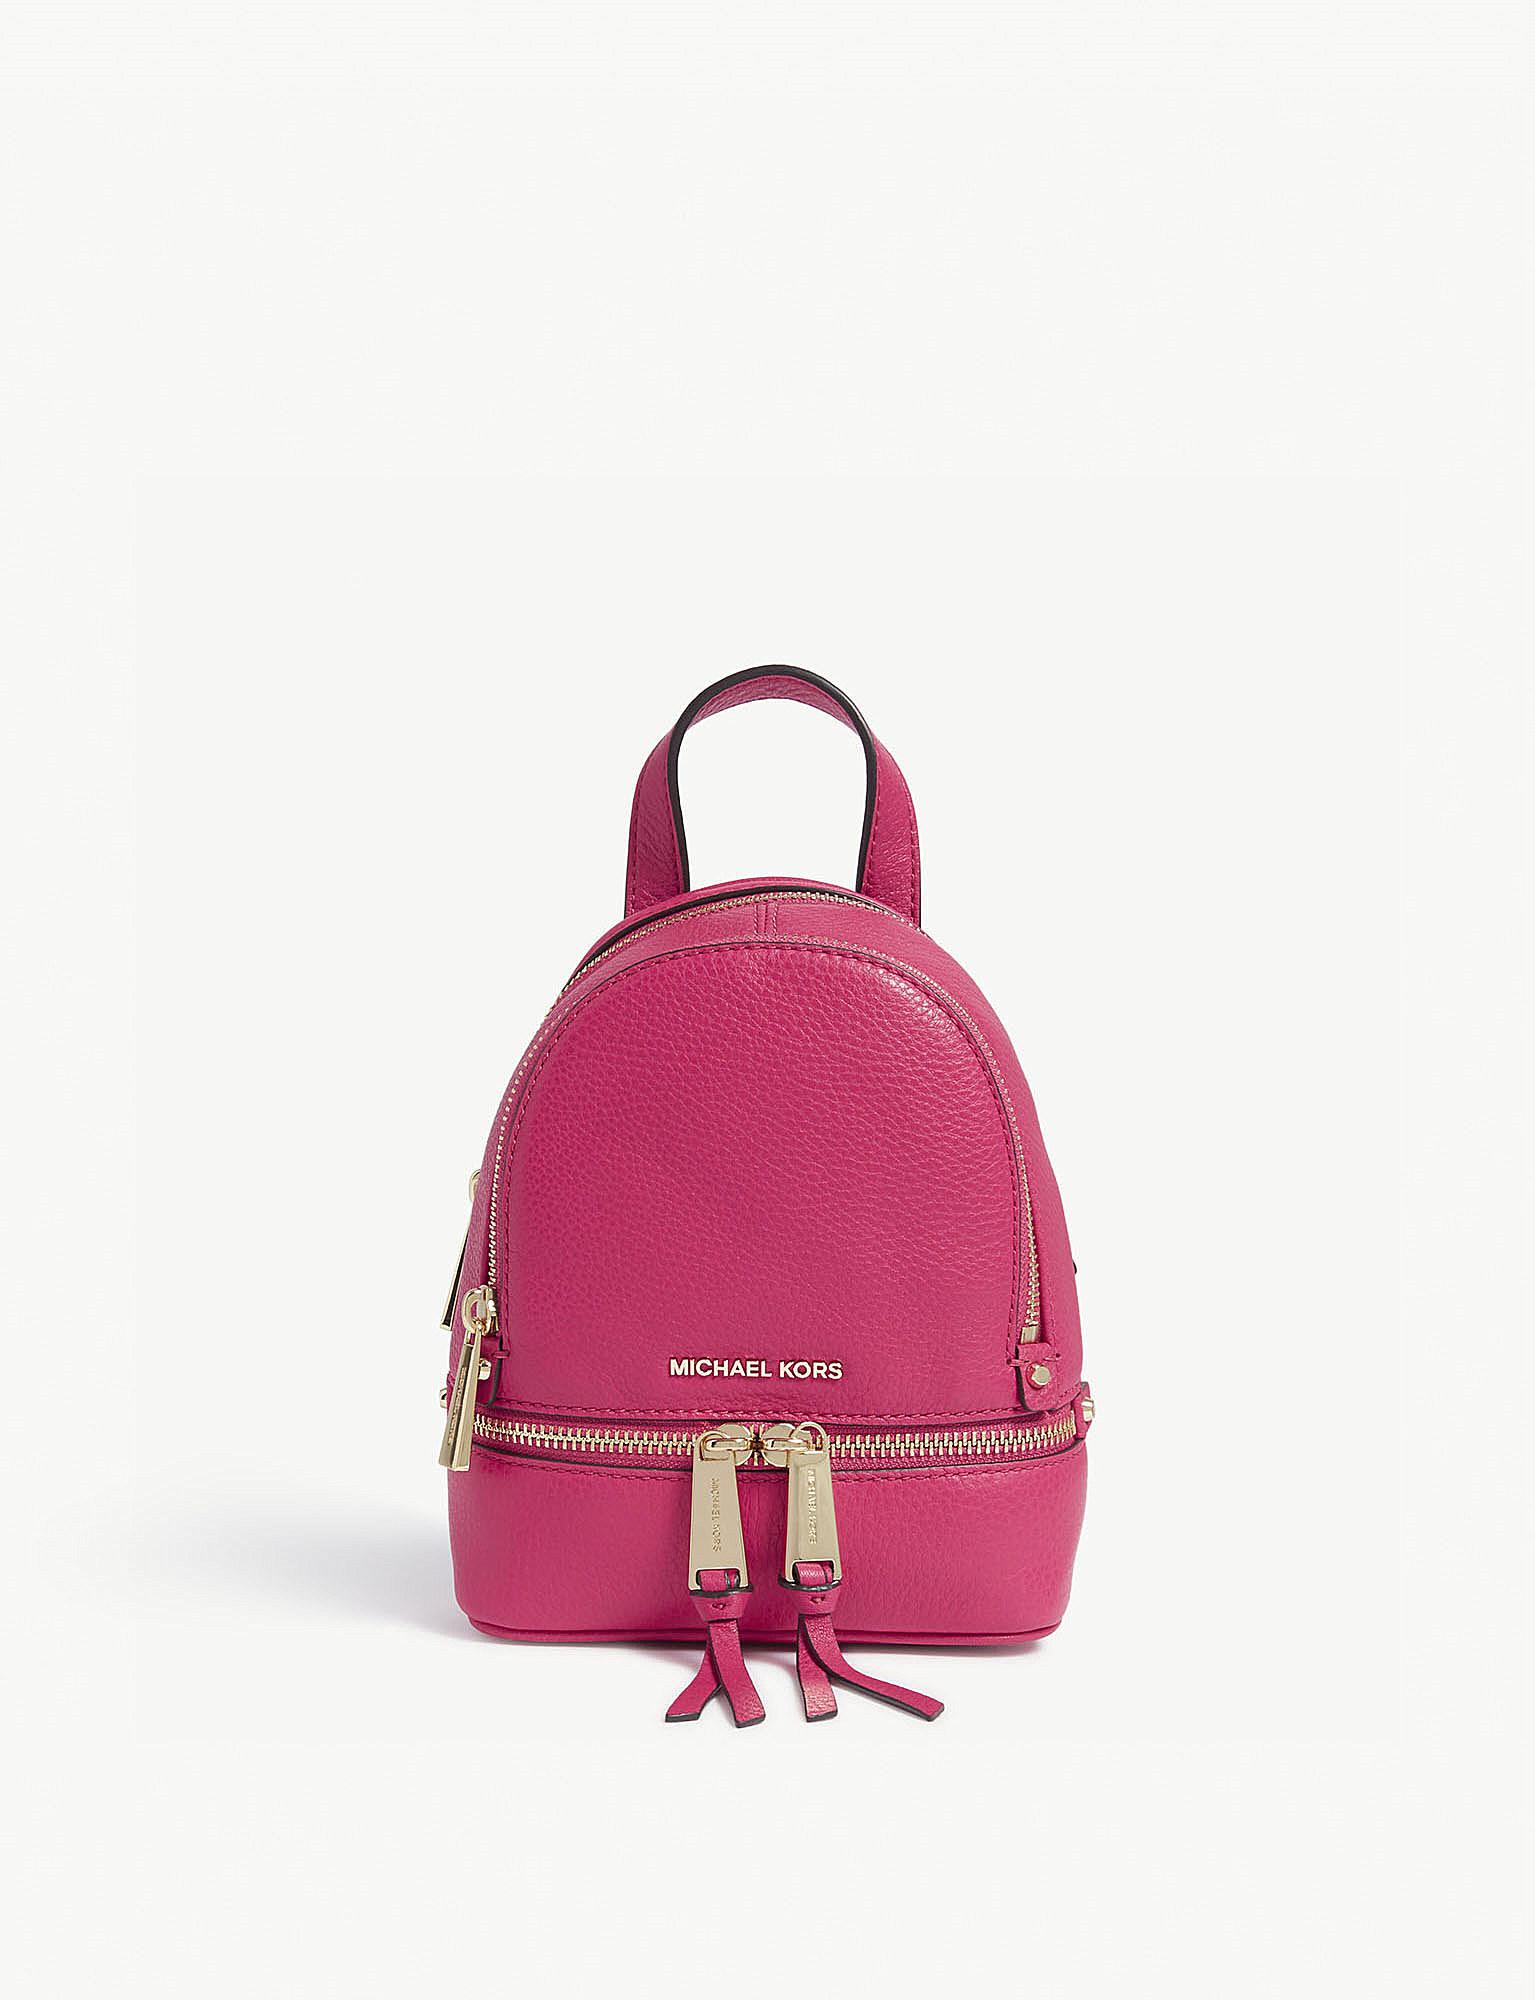 Michael Kors Mini Backpack Pink Top Sellers, SAVE 52%.